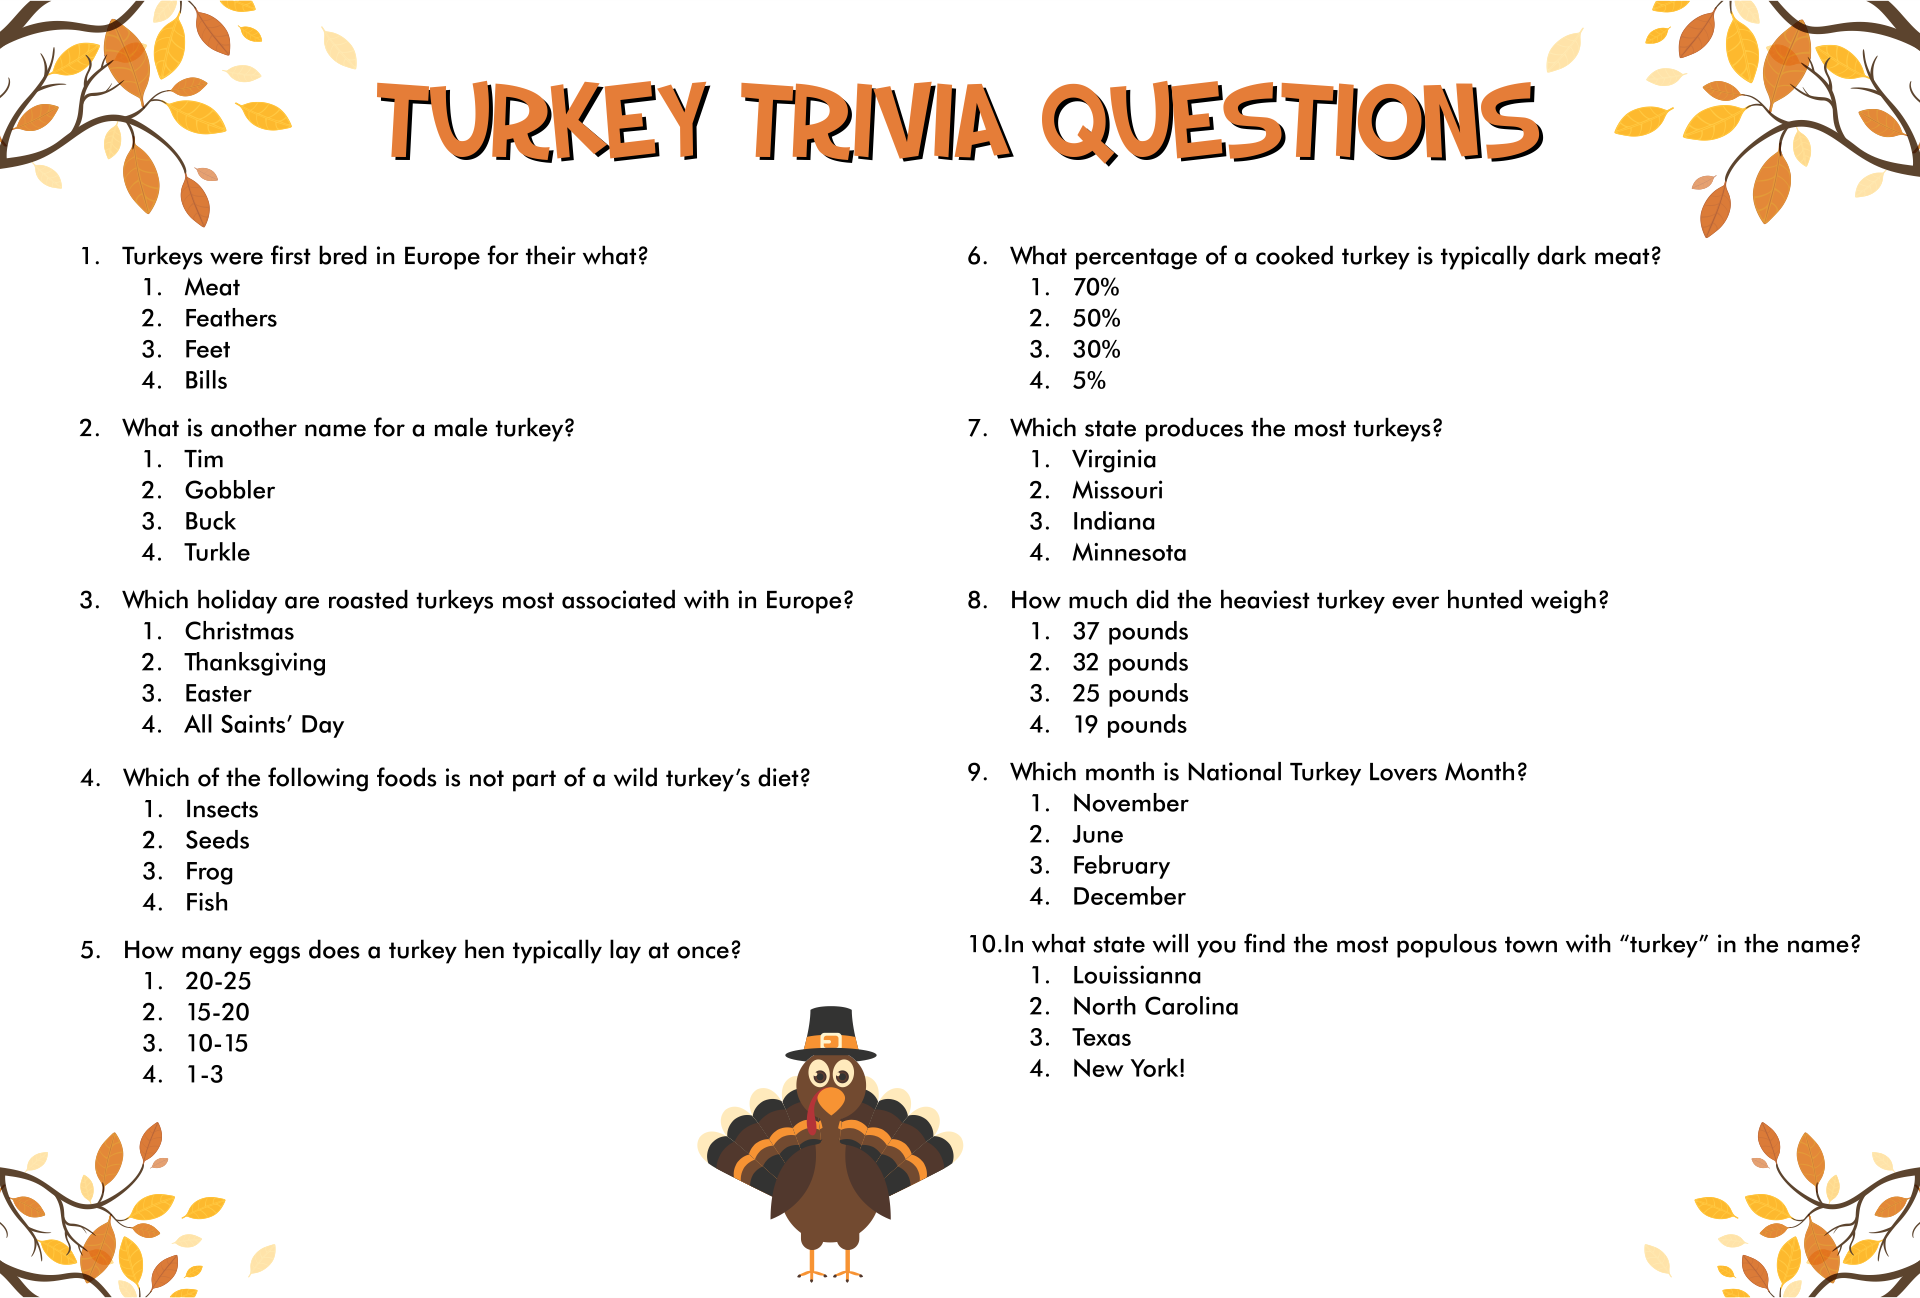 Printable Thanksgiving Trivia Quiz